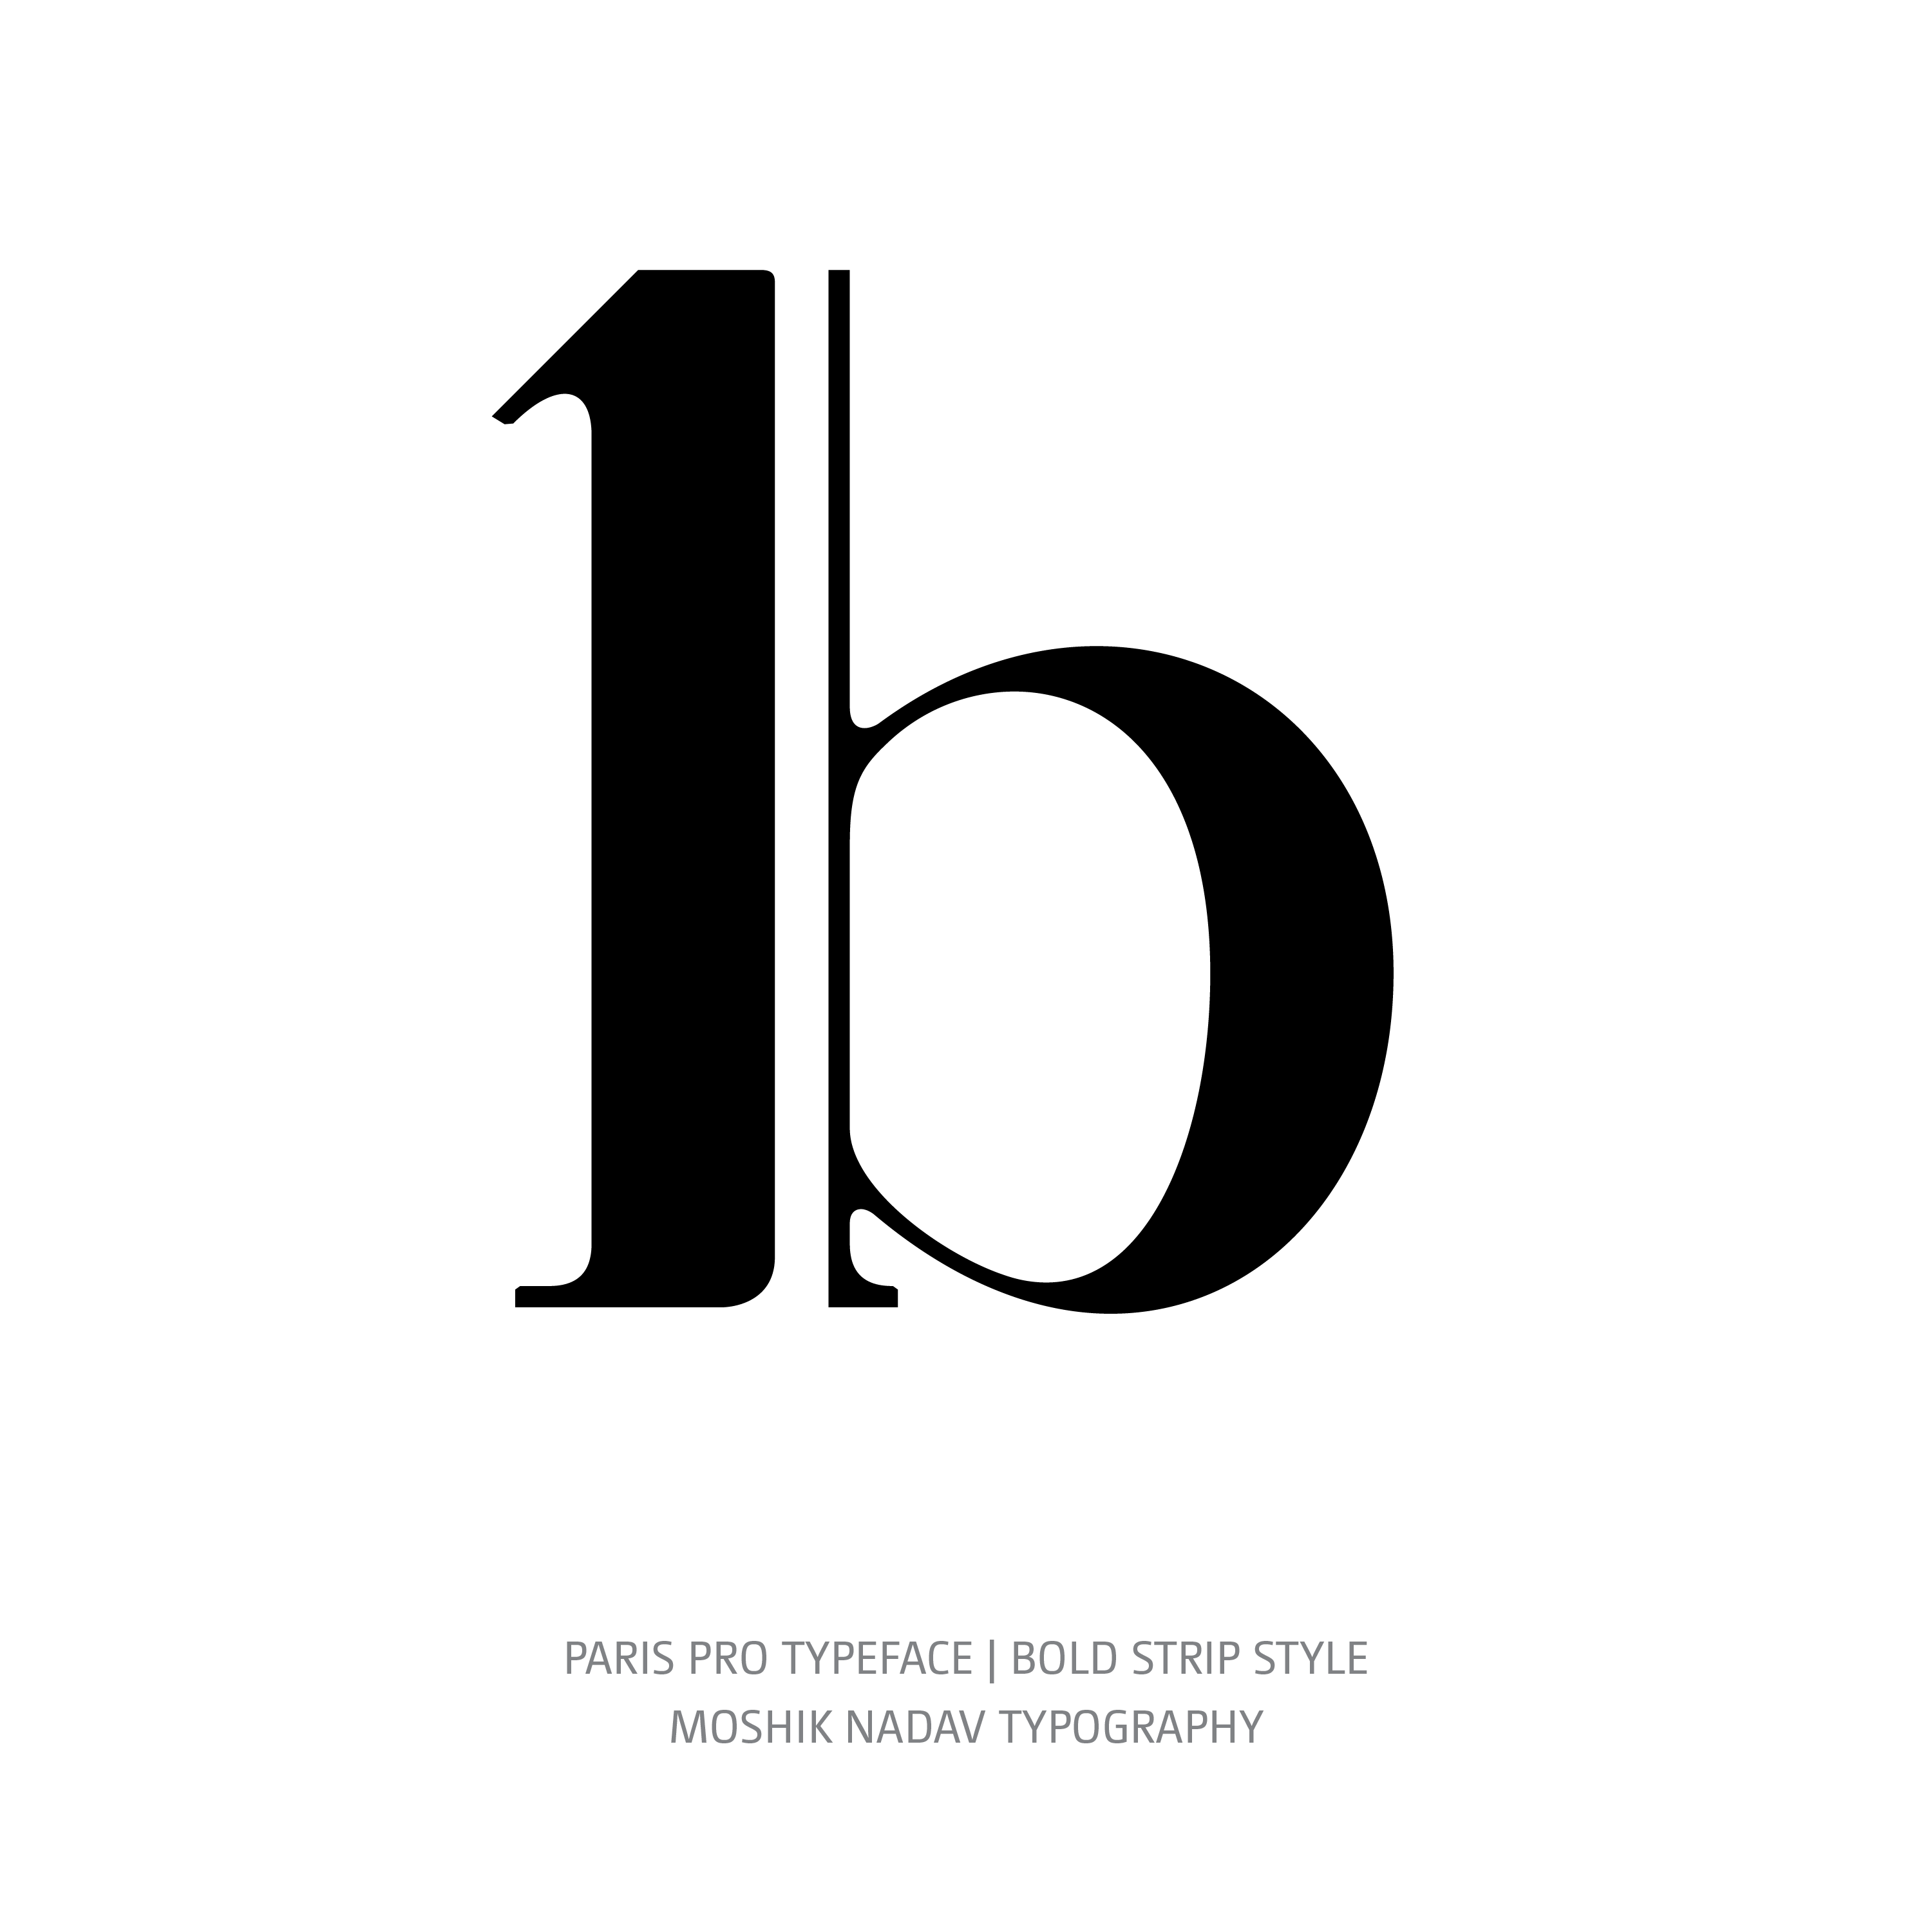 Paris Pro Typeface Bold Strip b